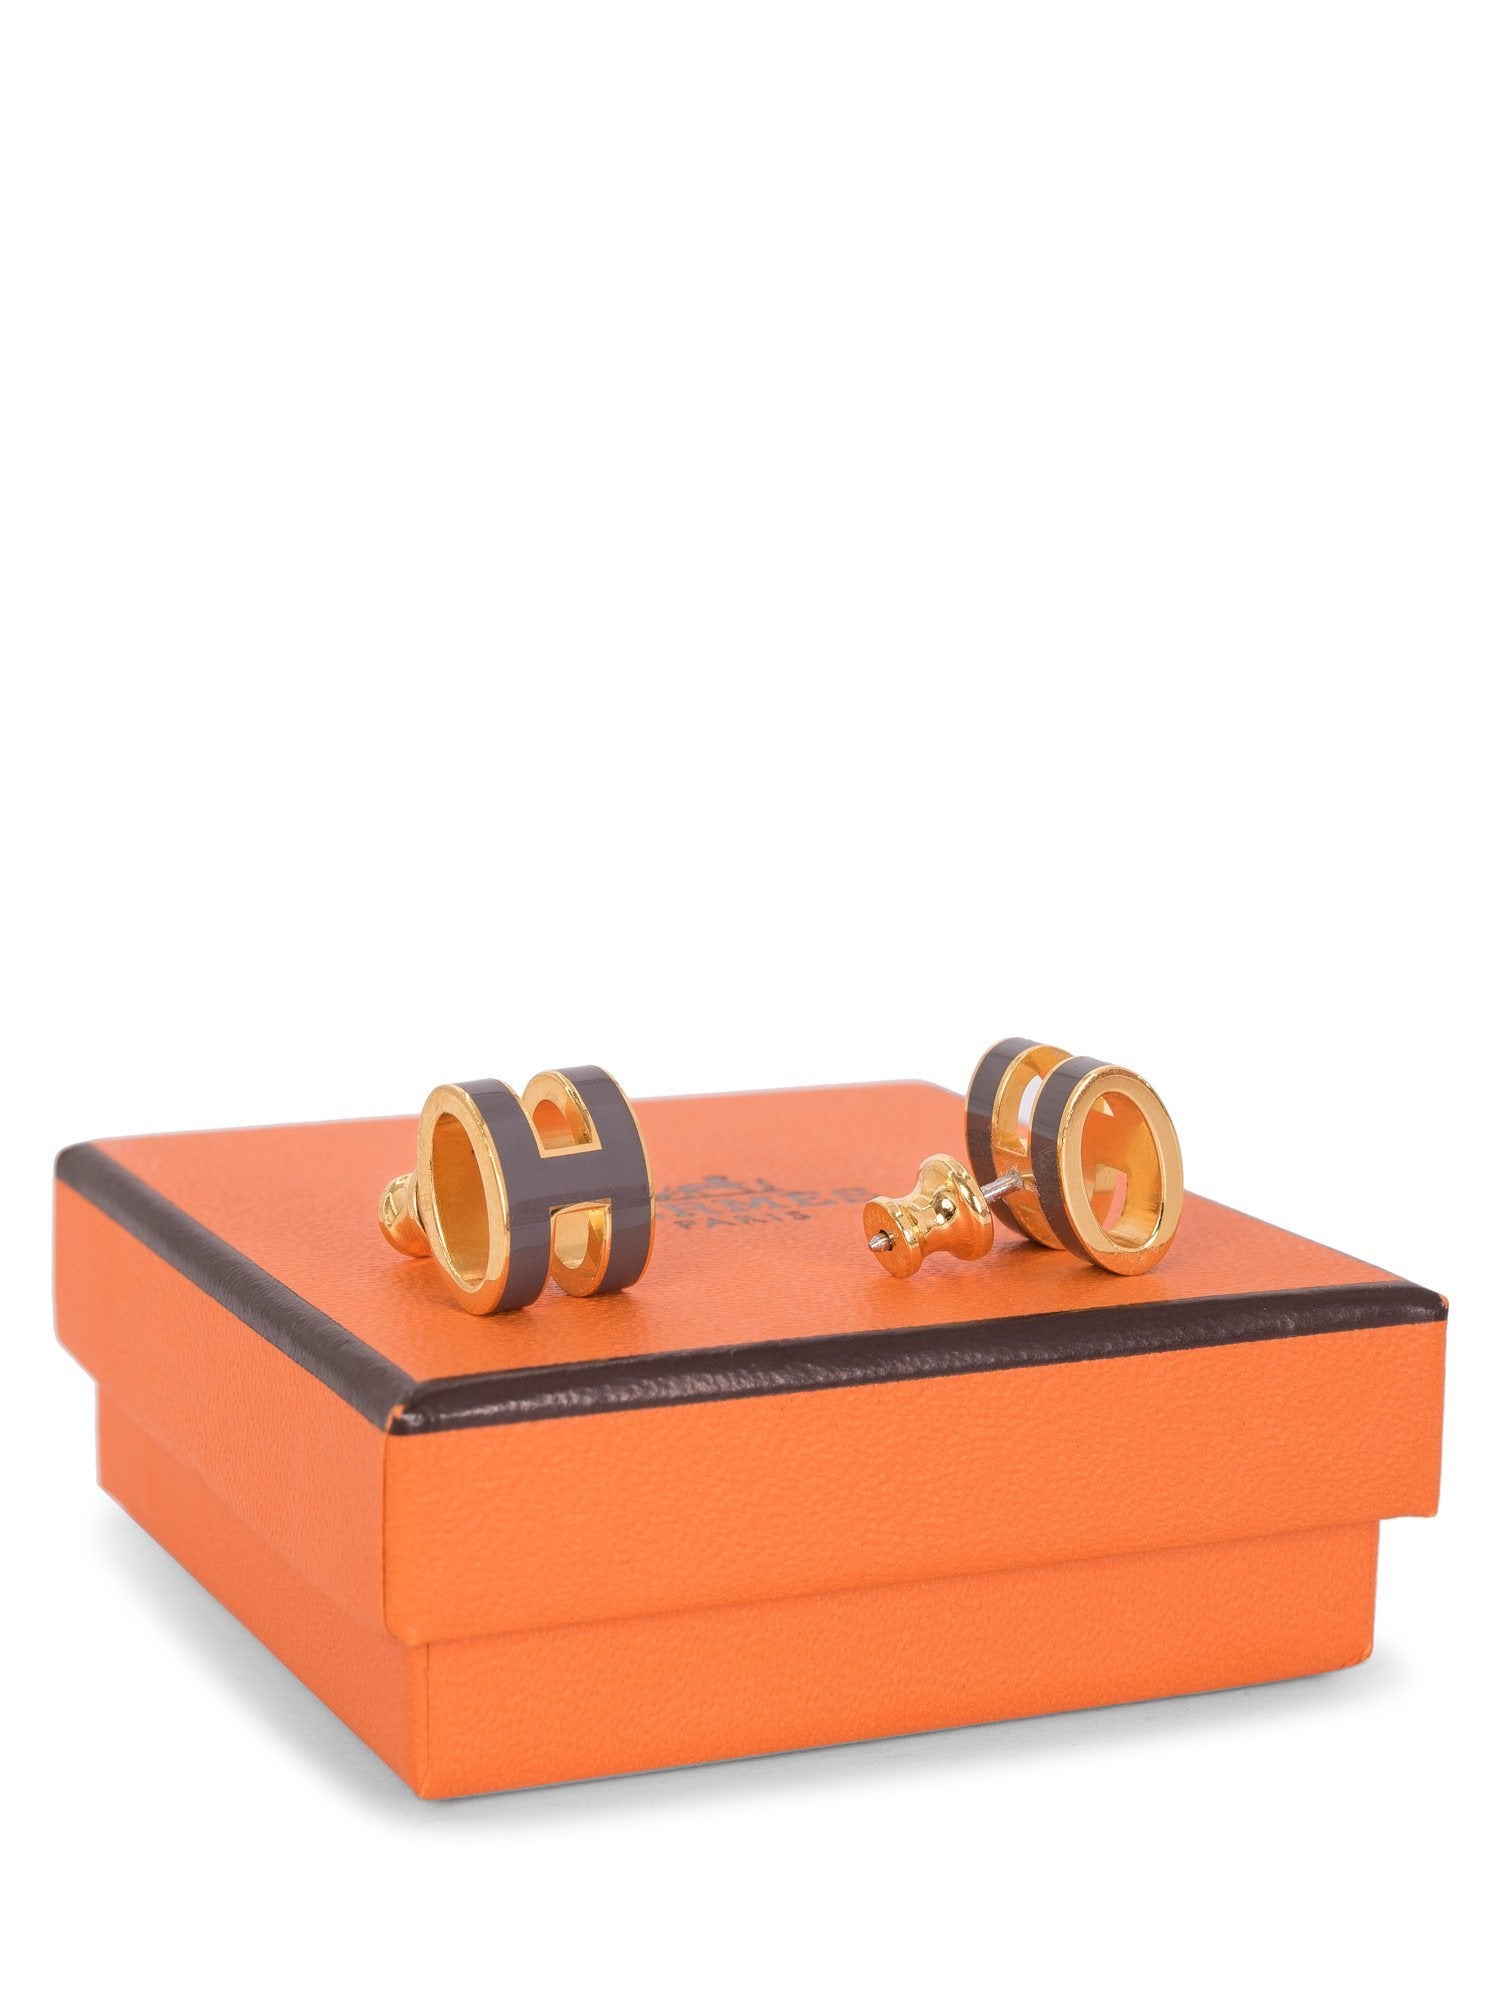 Hermes Gold Lacquered Pop H Earrings Taupe-designer resale